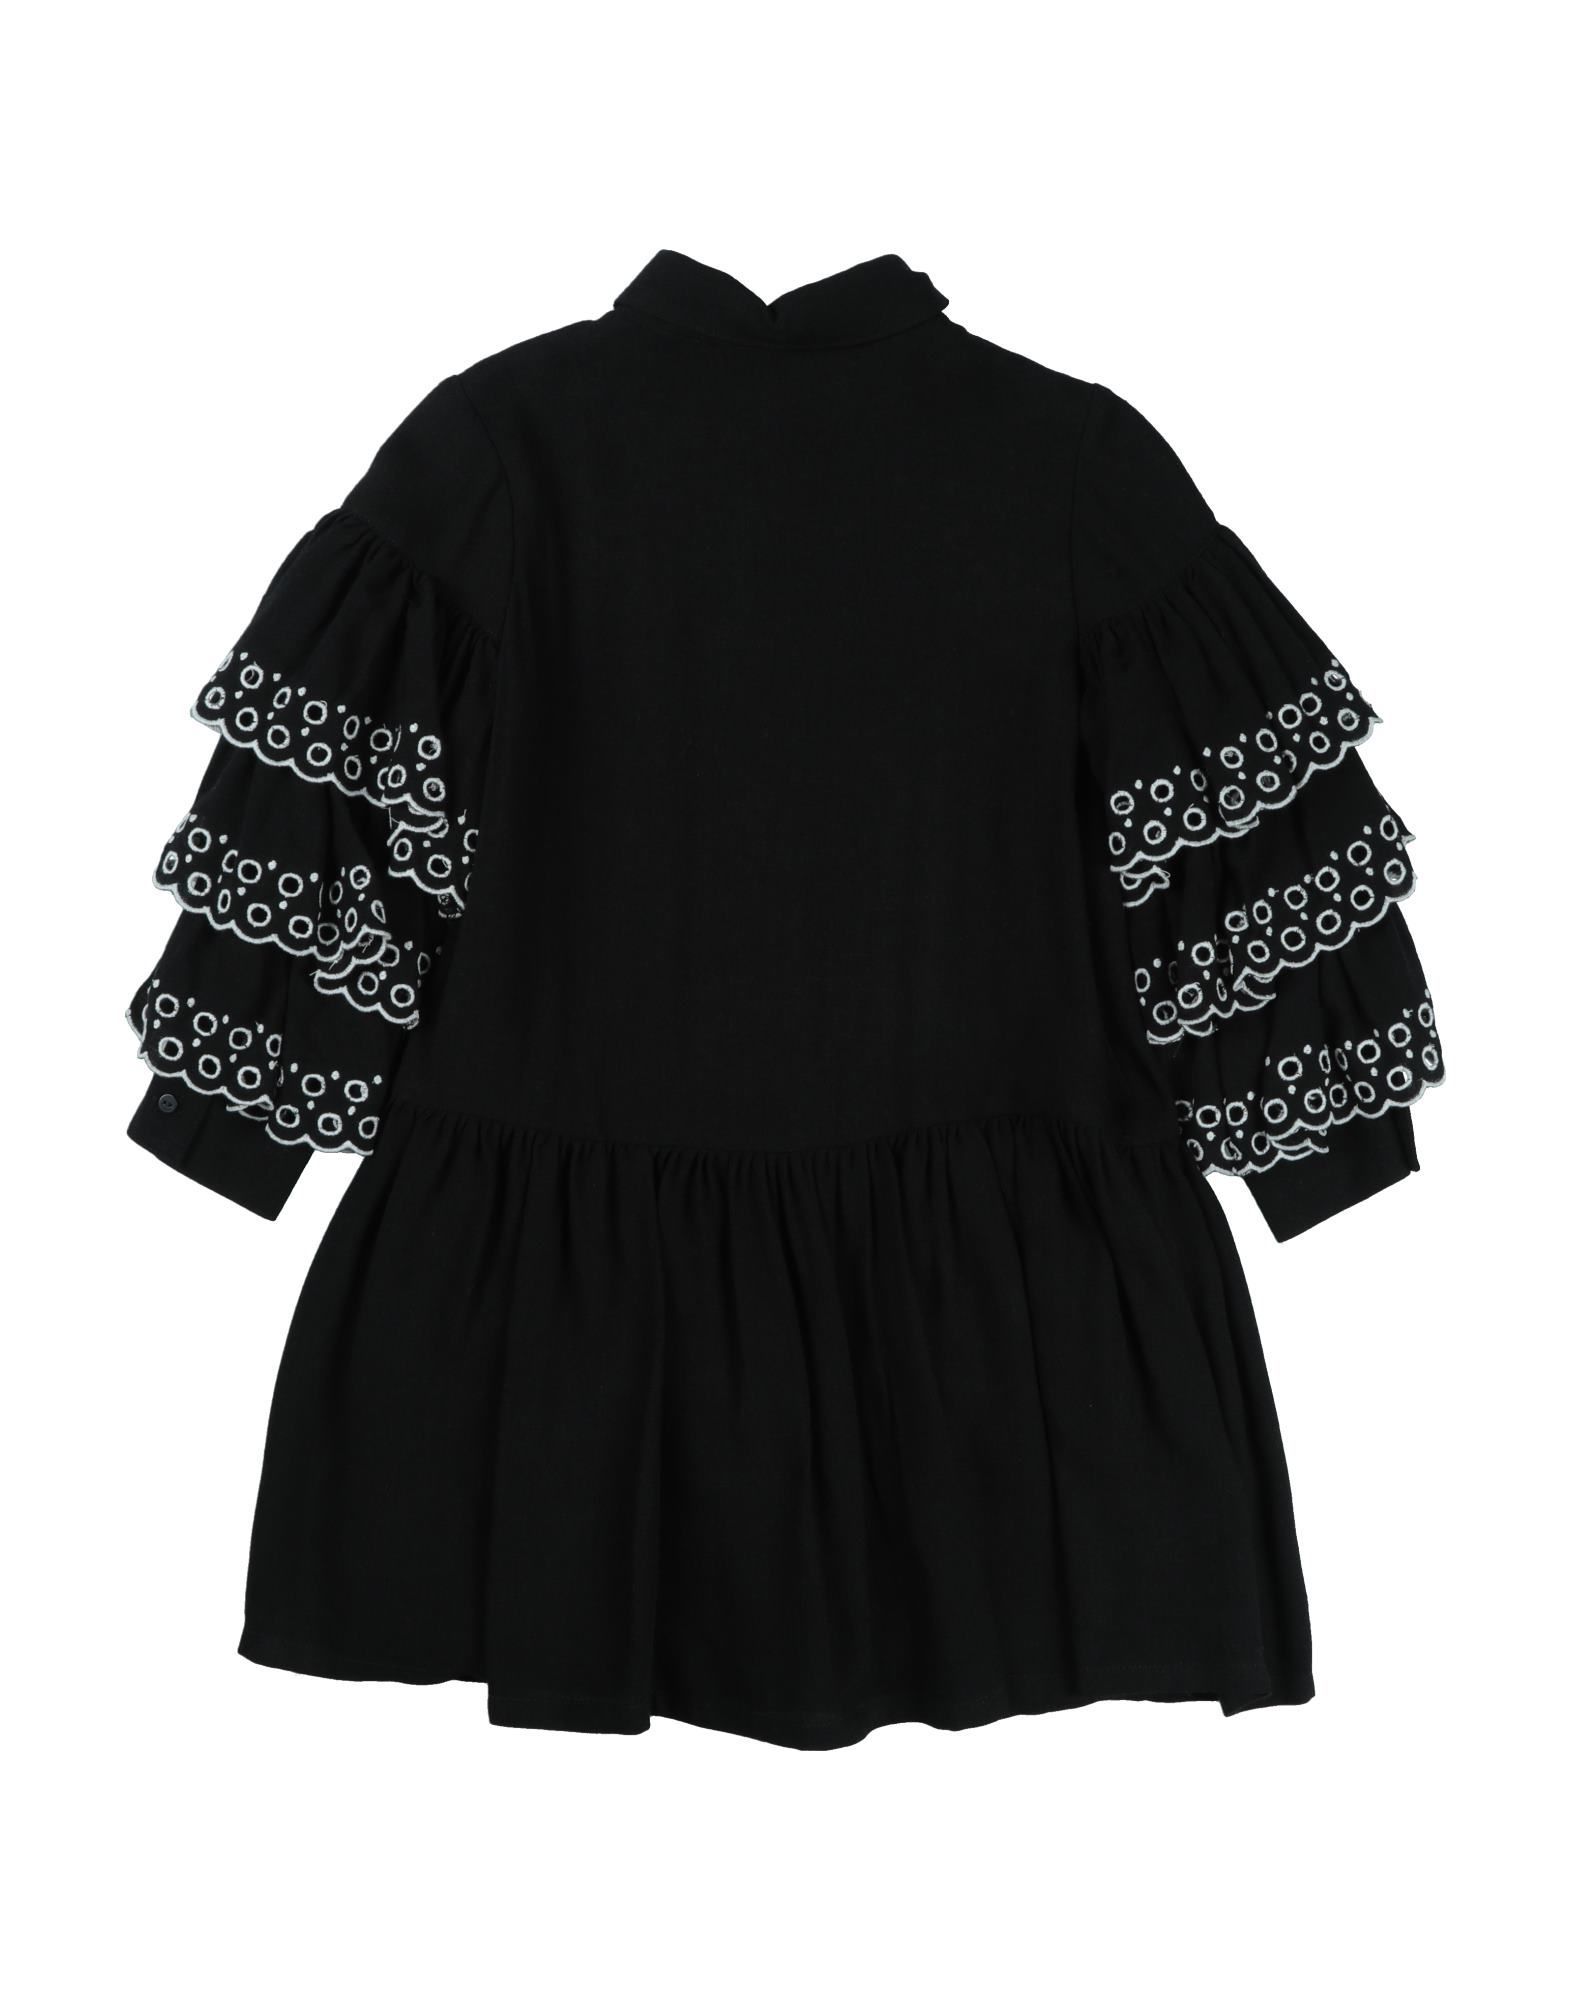 Givenchy Girls' Kids’ Dress in Black